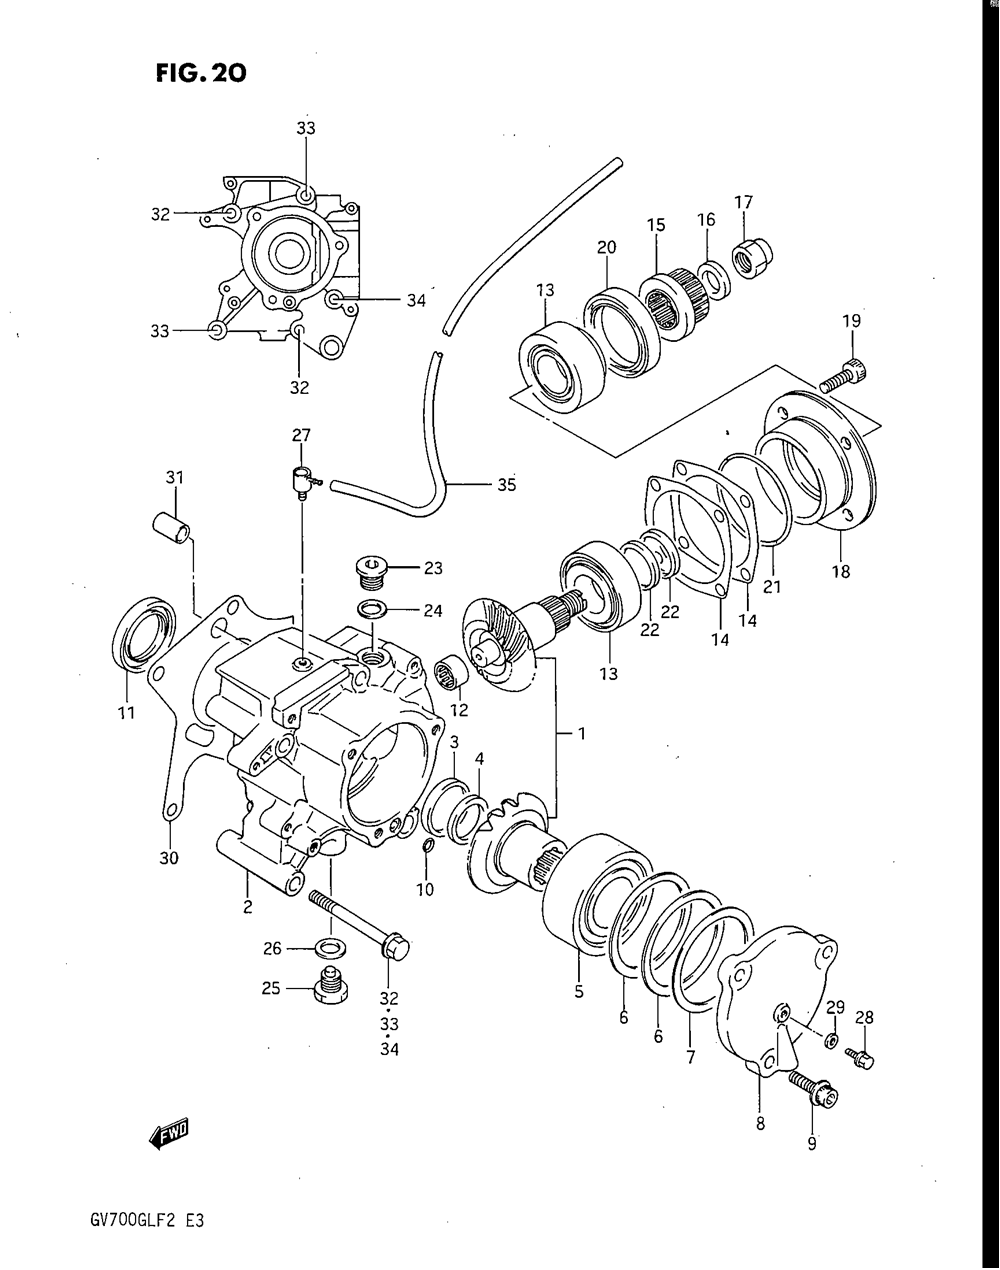 Secondary drive gear